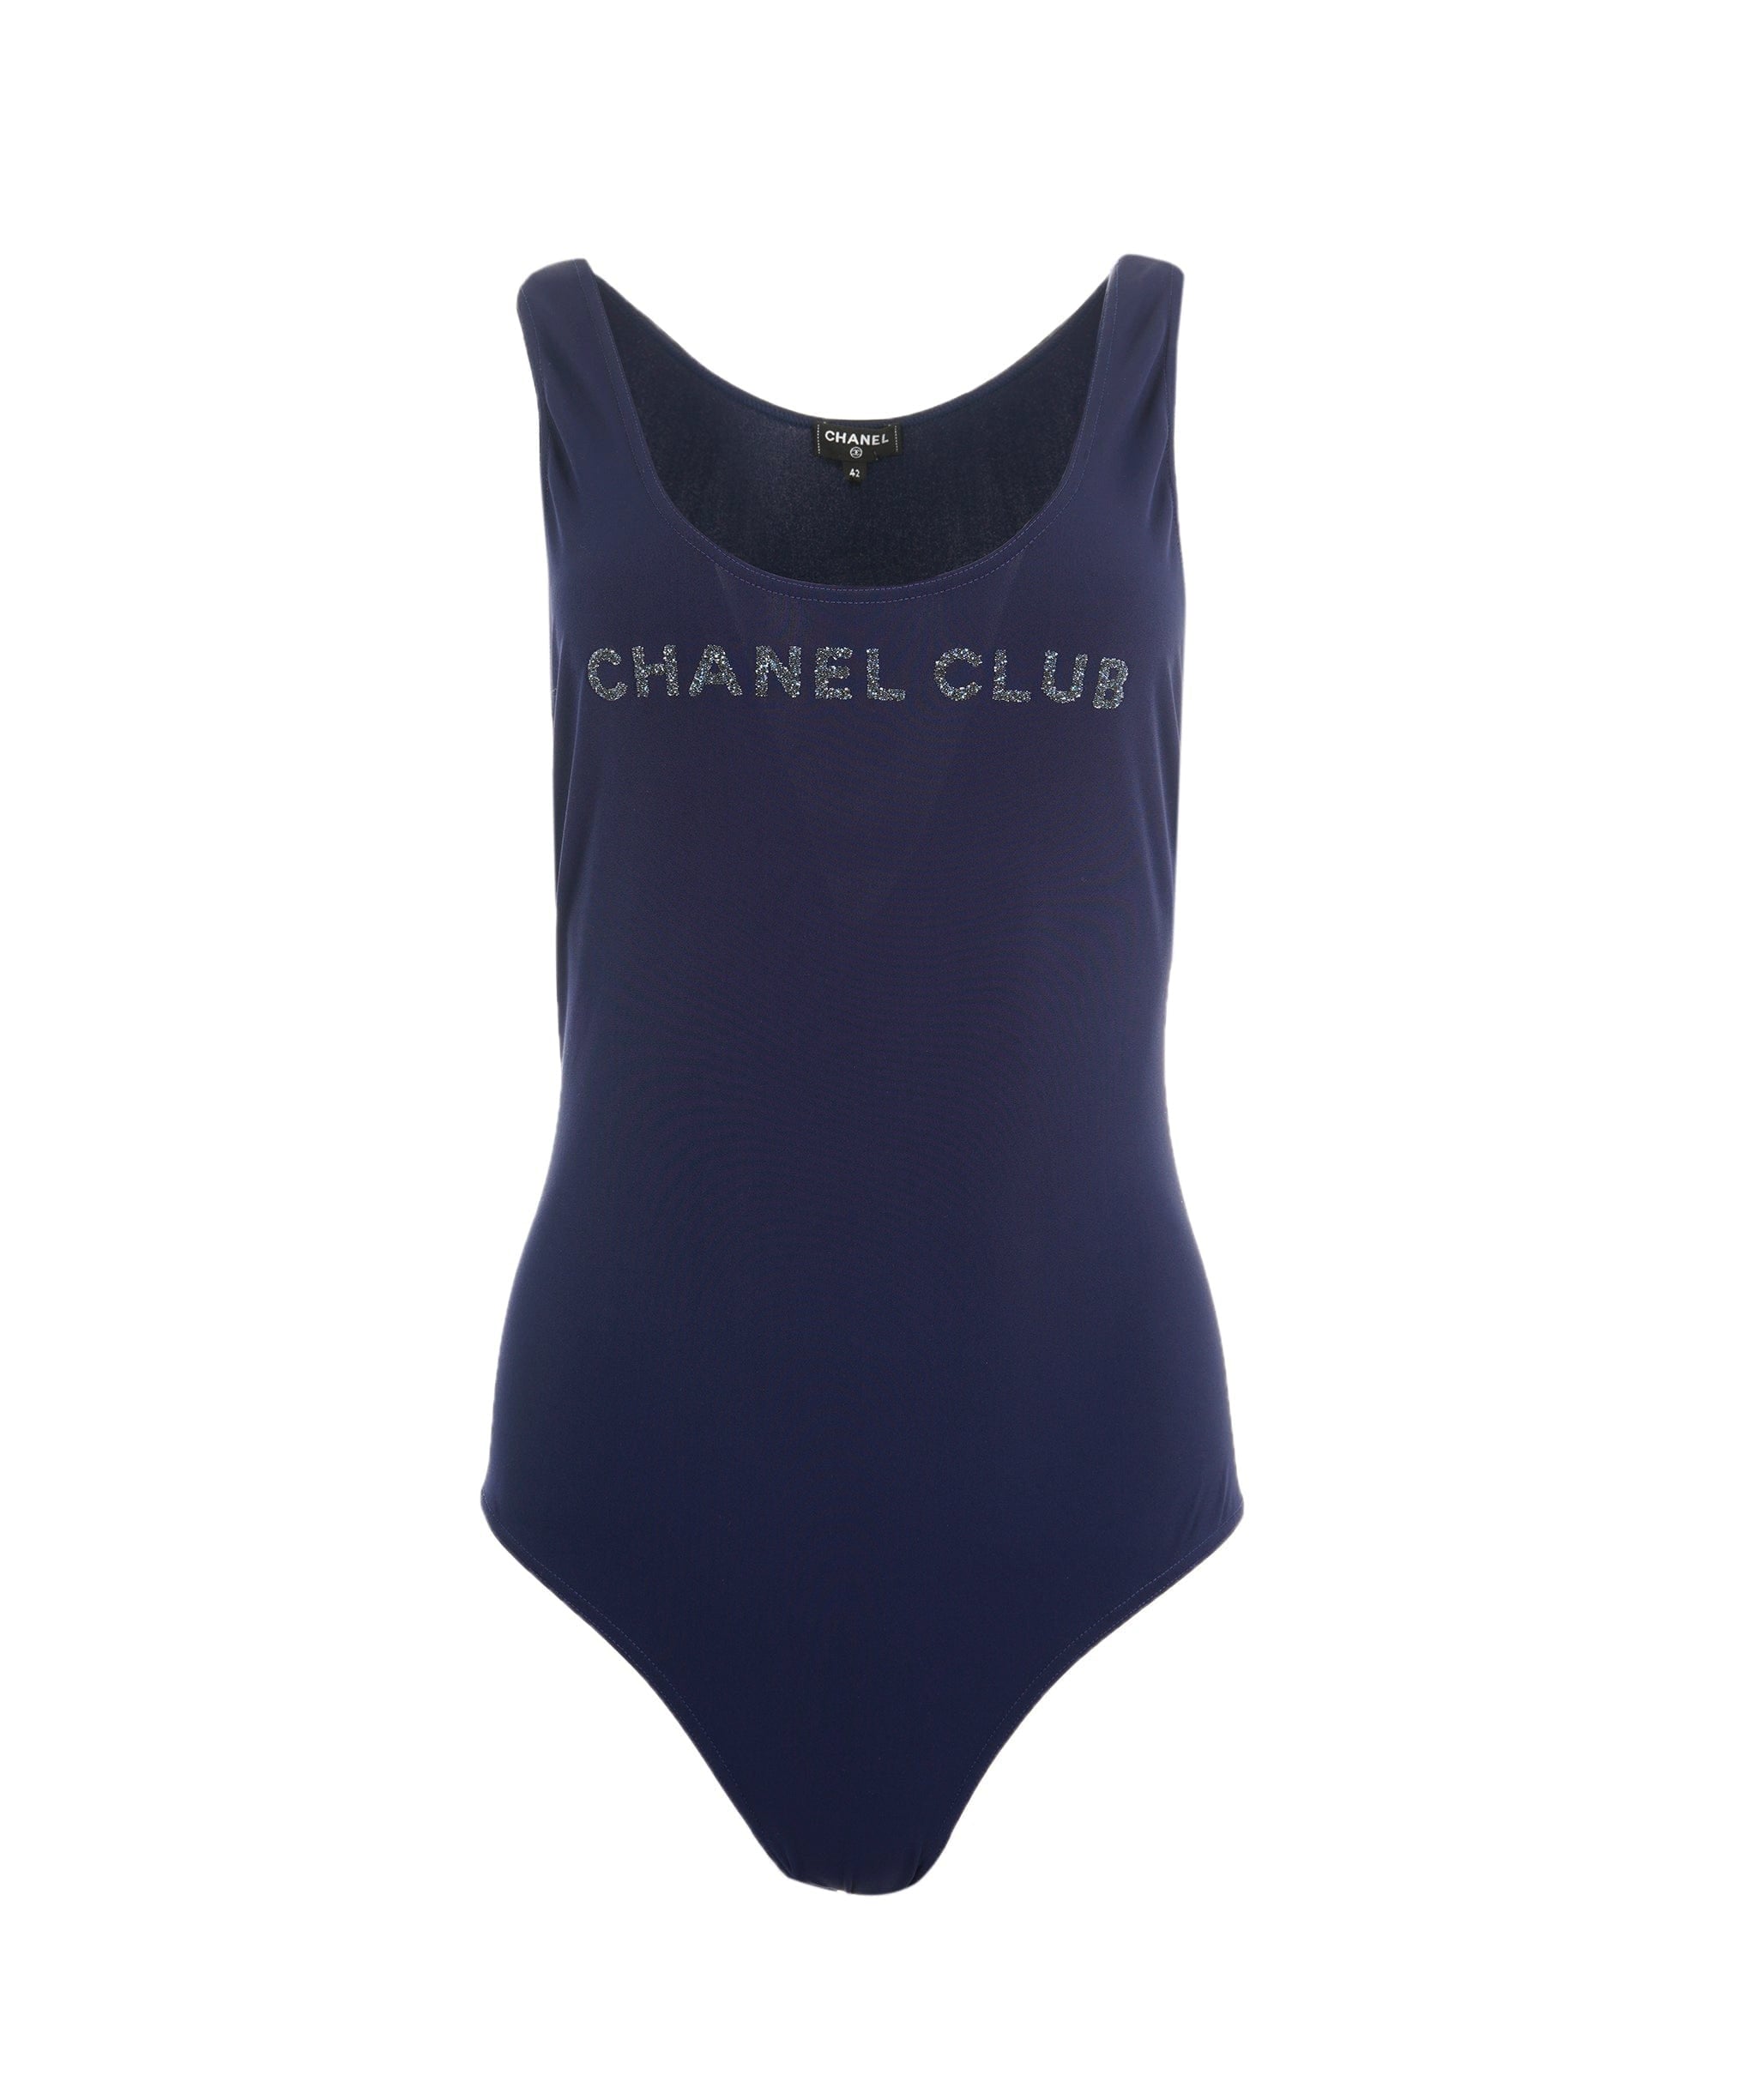 Chanel Chanel swimsuit 1pc Chanel club FR38 AVC1443